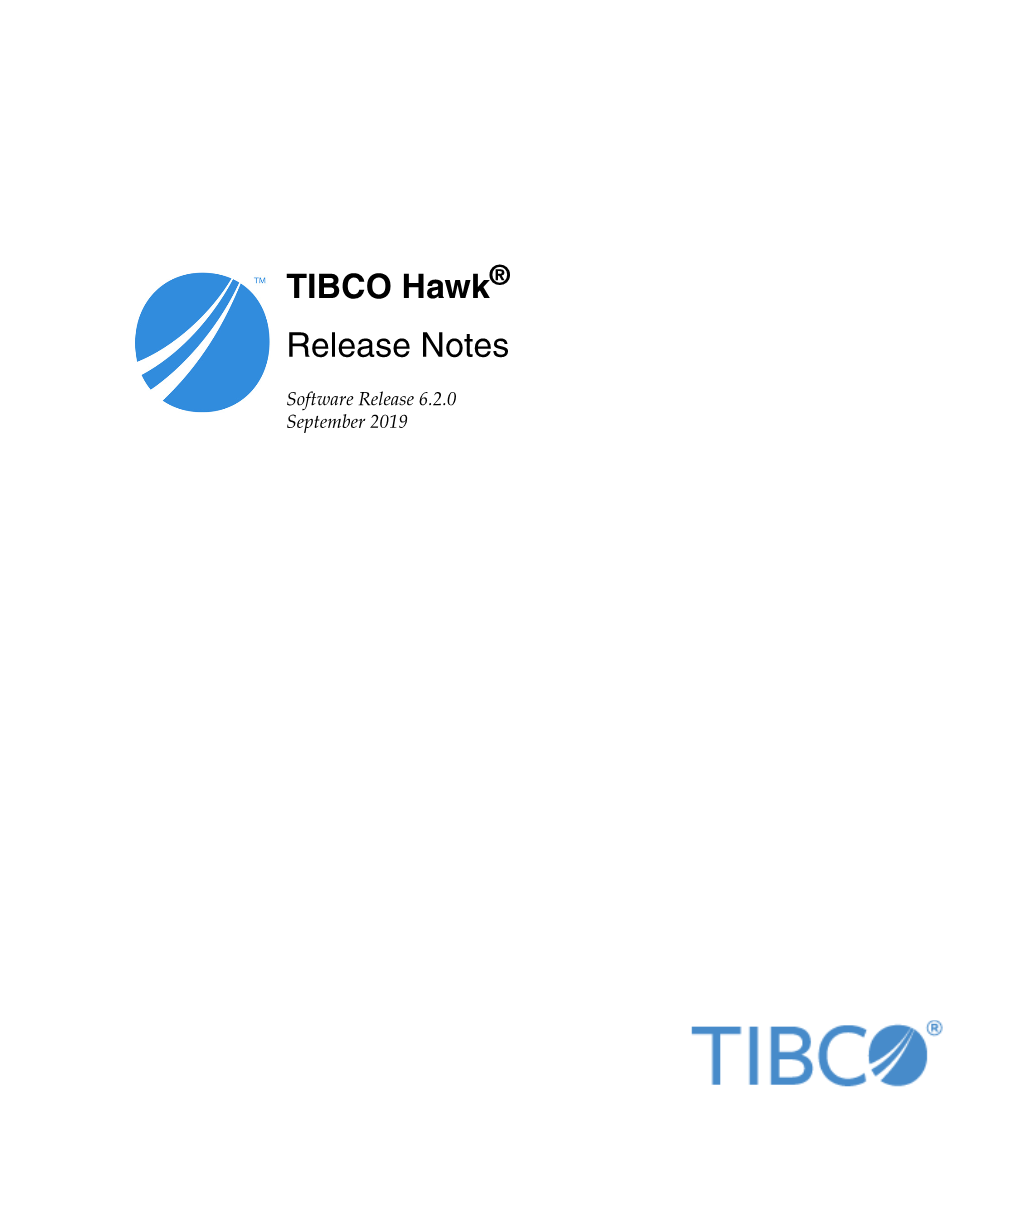 TIBCO Hawk® Release Notes